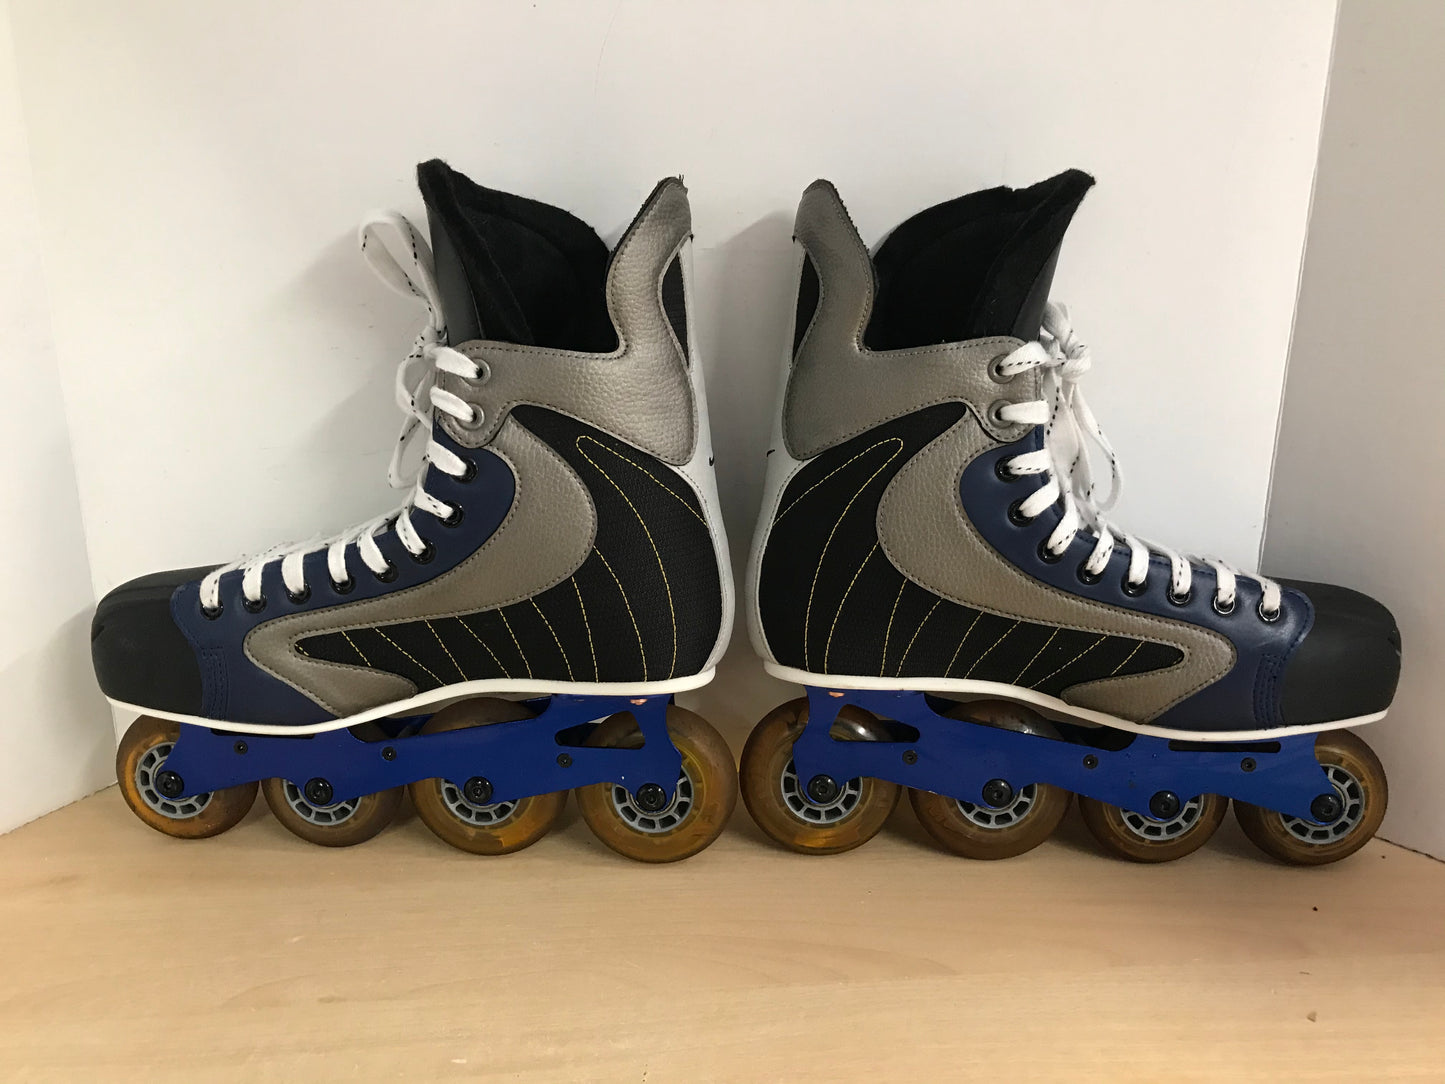 Hockey Roller Hockey Skates Men's Size 10 EE Shoe Size Nike New Demo Model